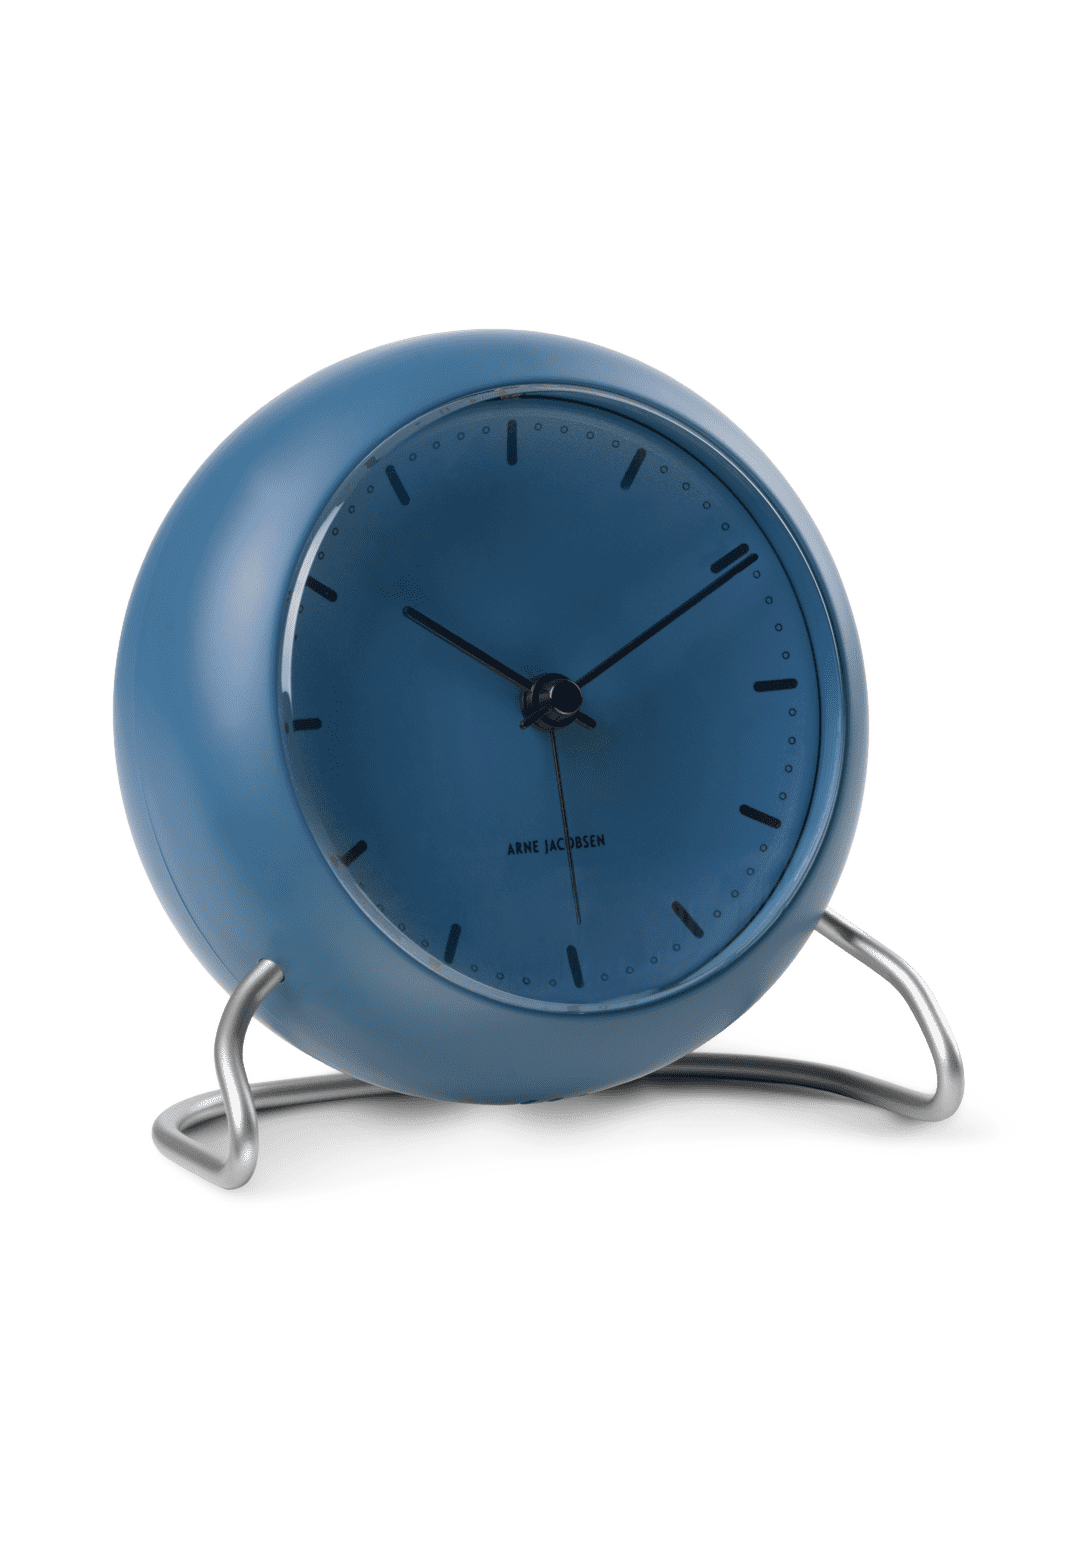 Arne Jacobsen City Hall Alarm Clock - Stone blue